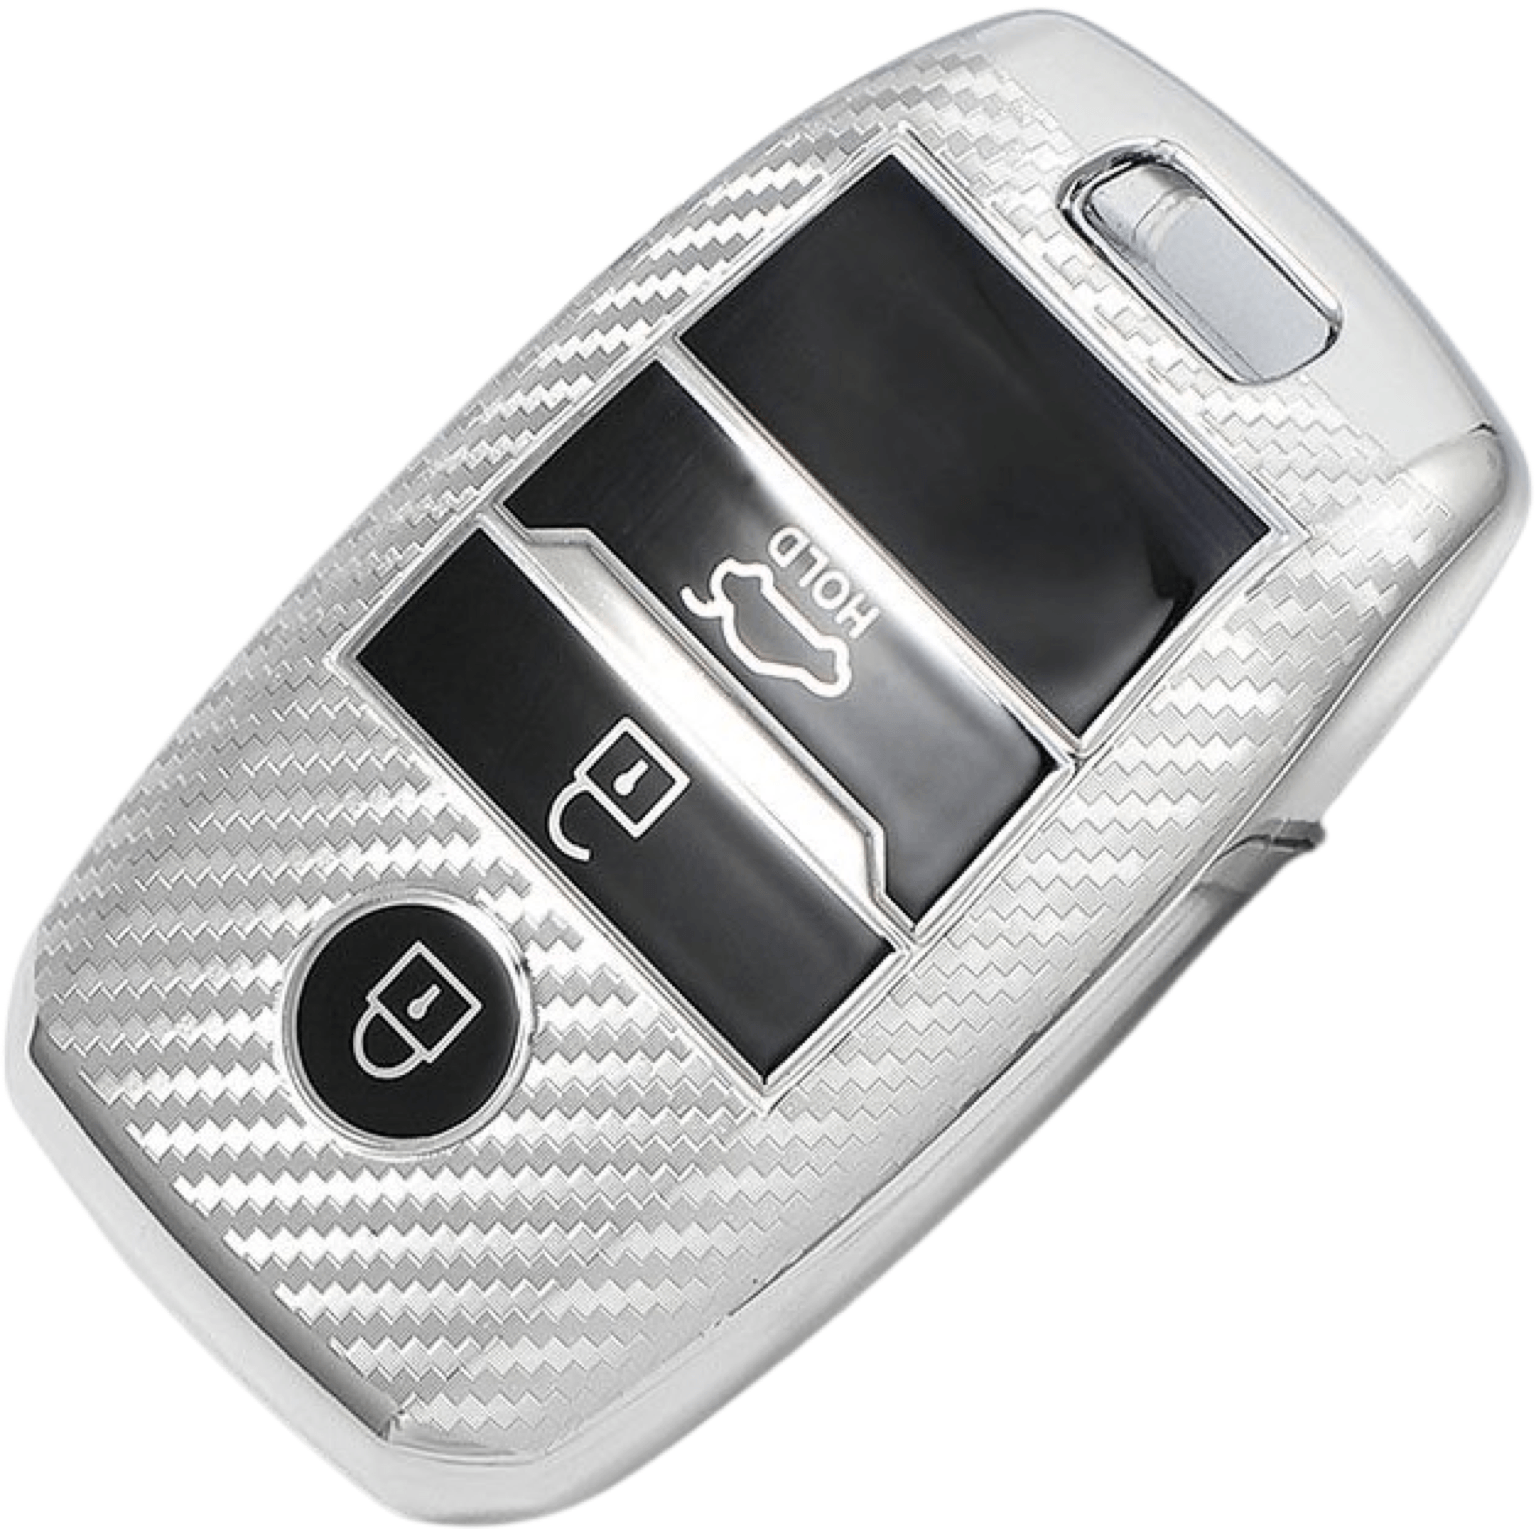 Kia Key Cover Silver | Cerato, Rio, Sportage, Sorento, Optima - Carbon Fibre Design | Kia Accessories - Keysleeves